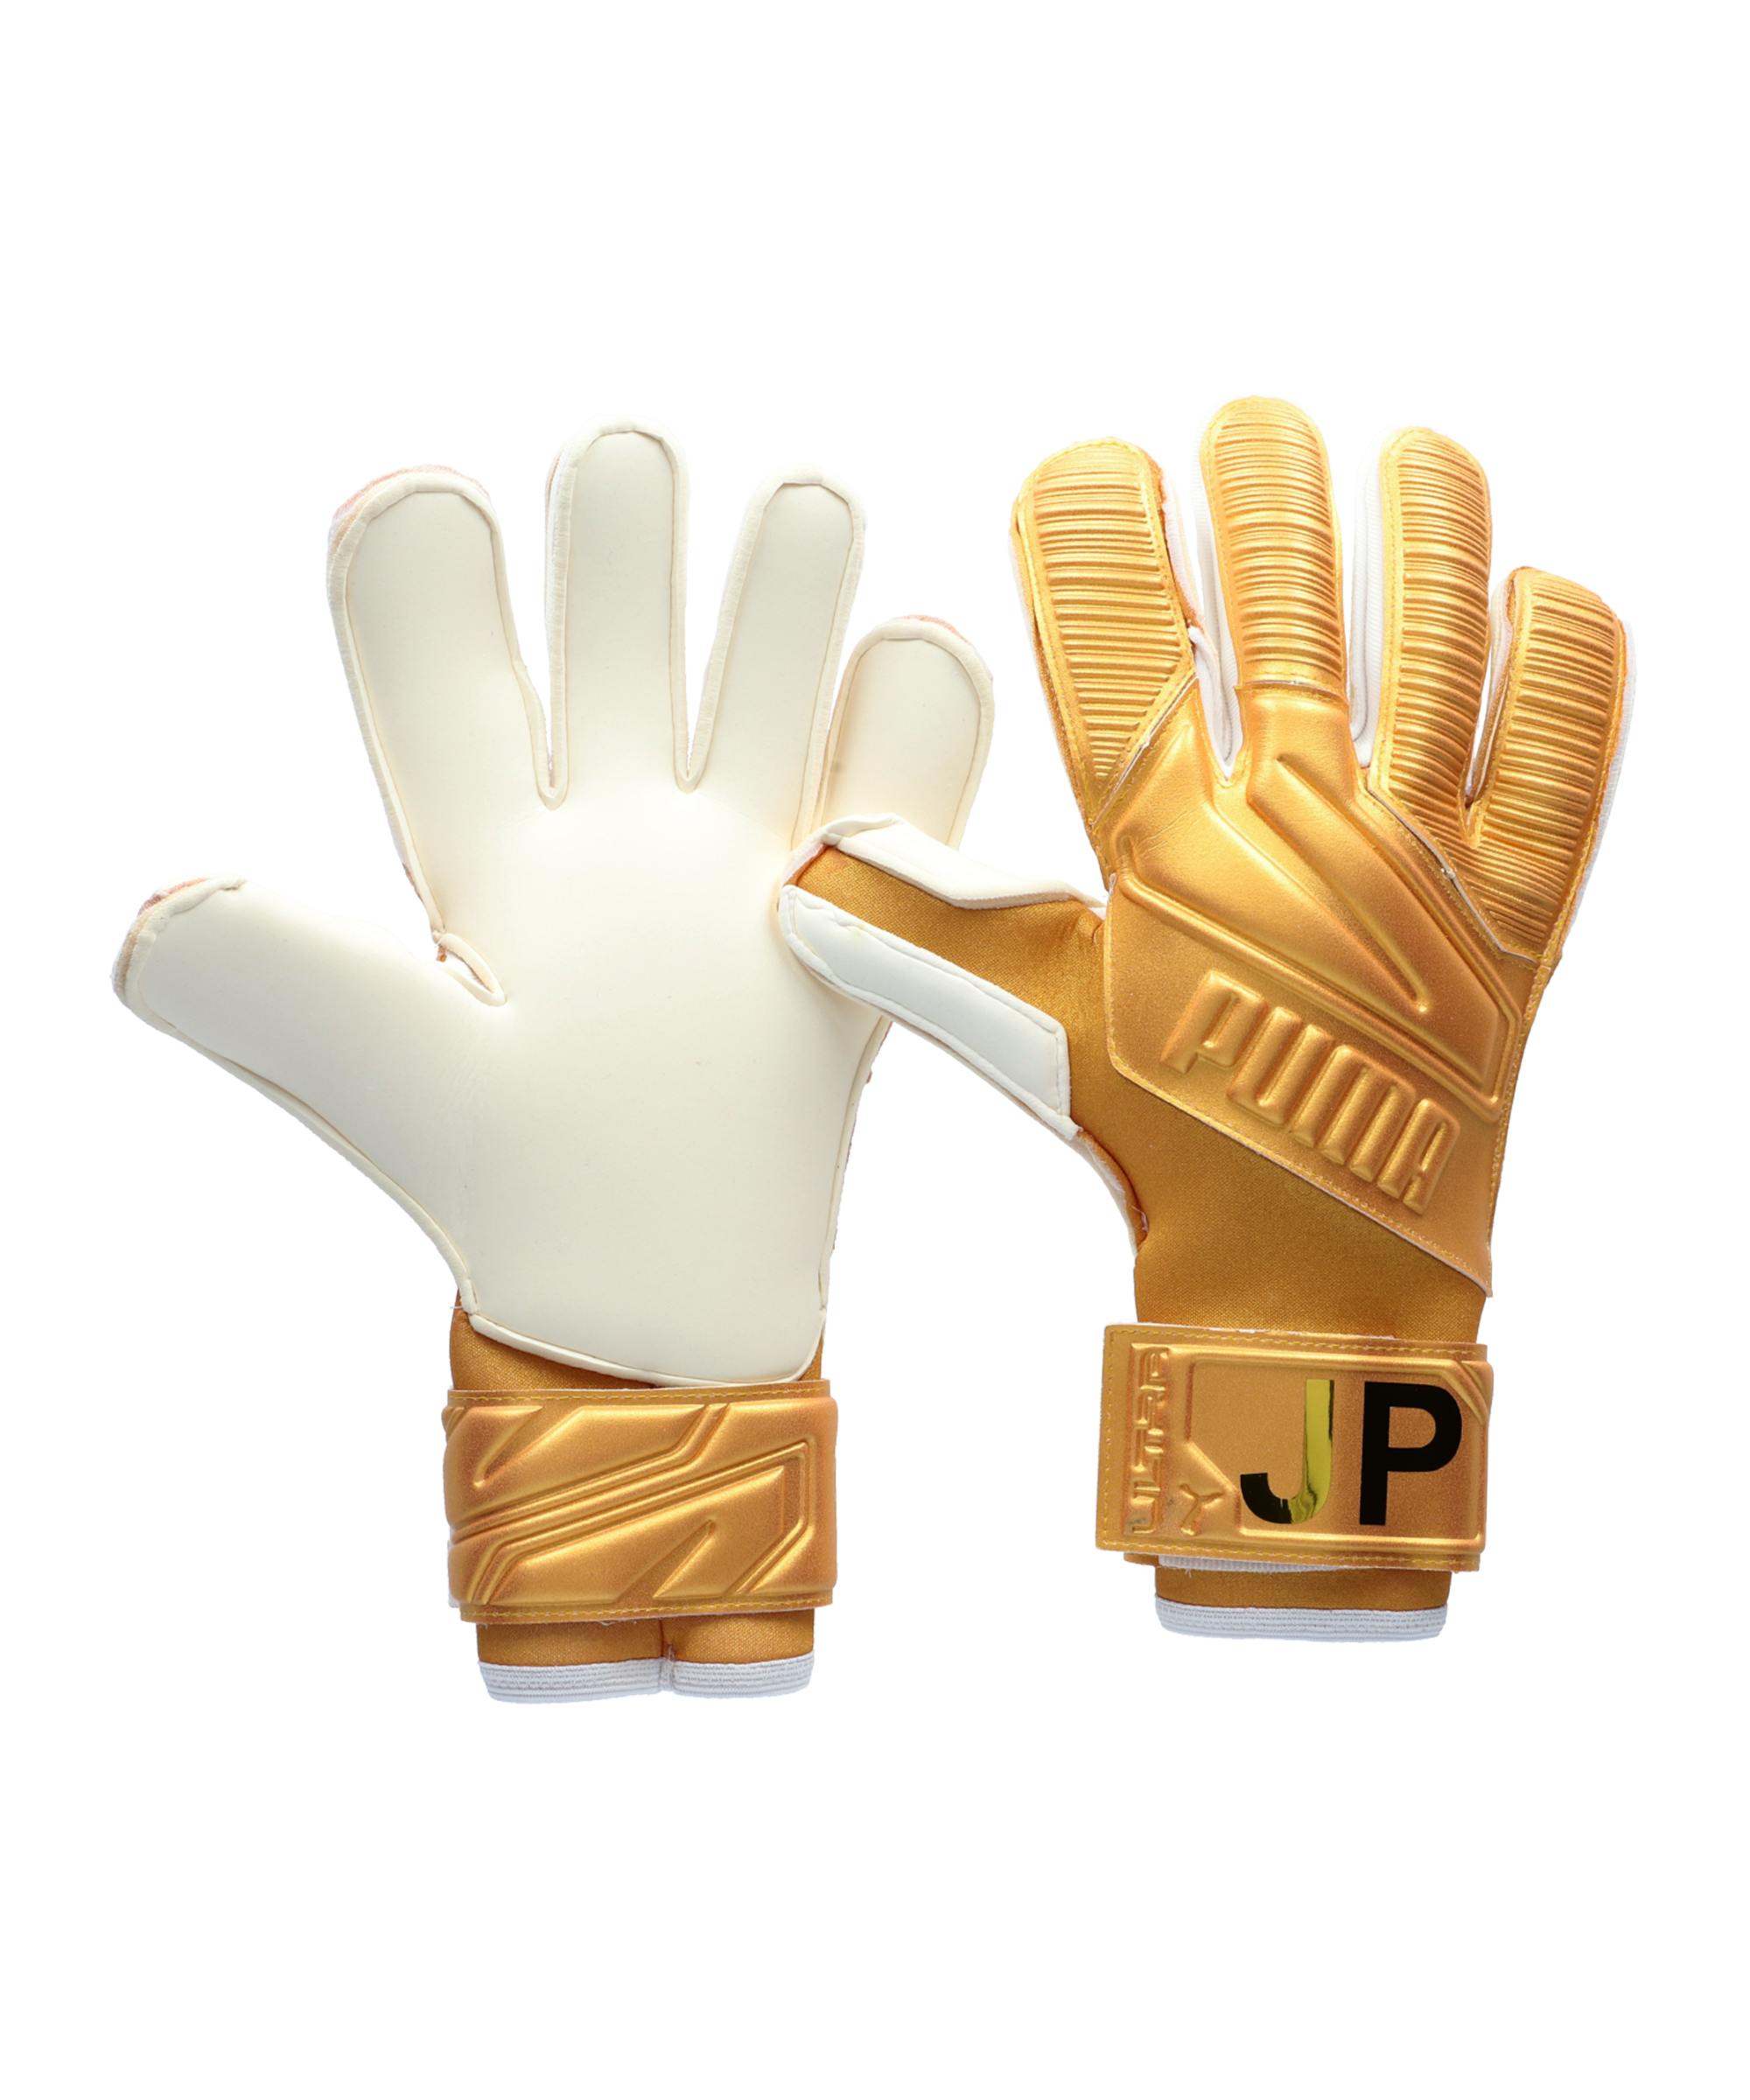 Goalkeeper's gloves Puma Future Z 2 Pickford Edition